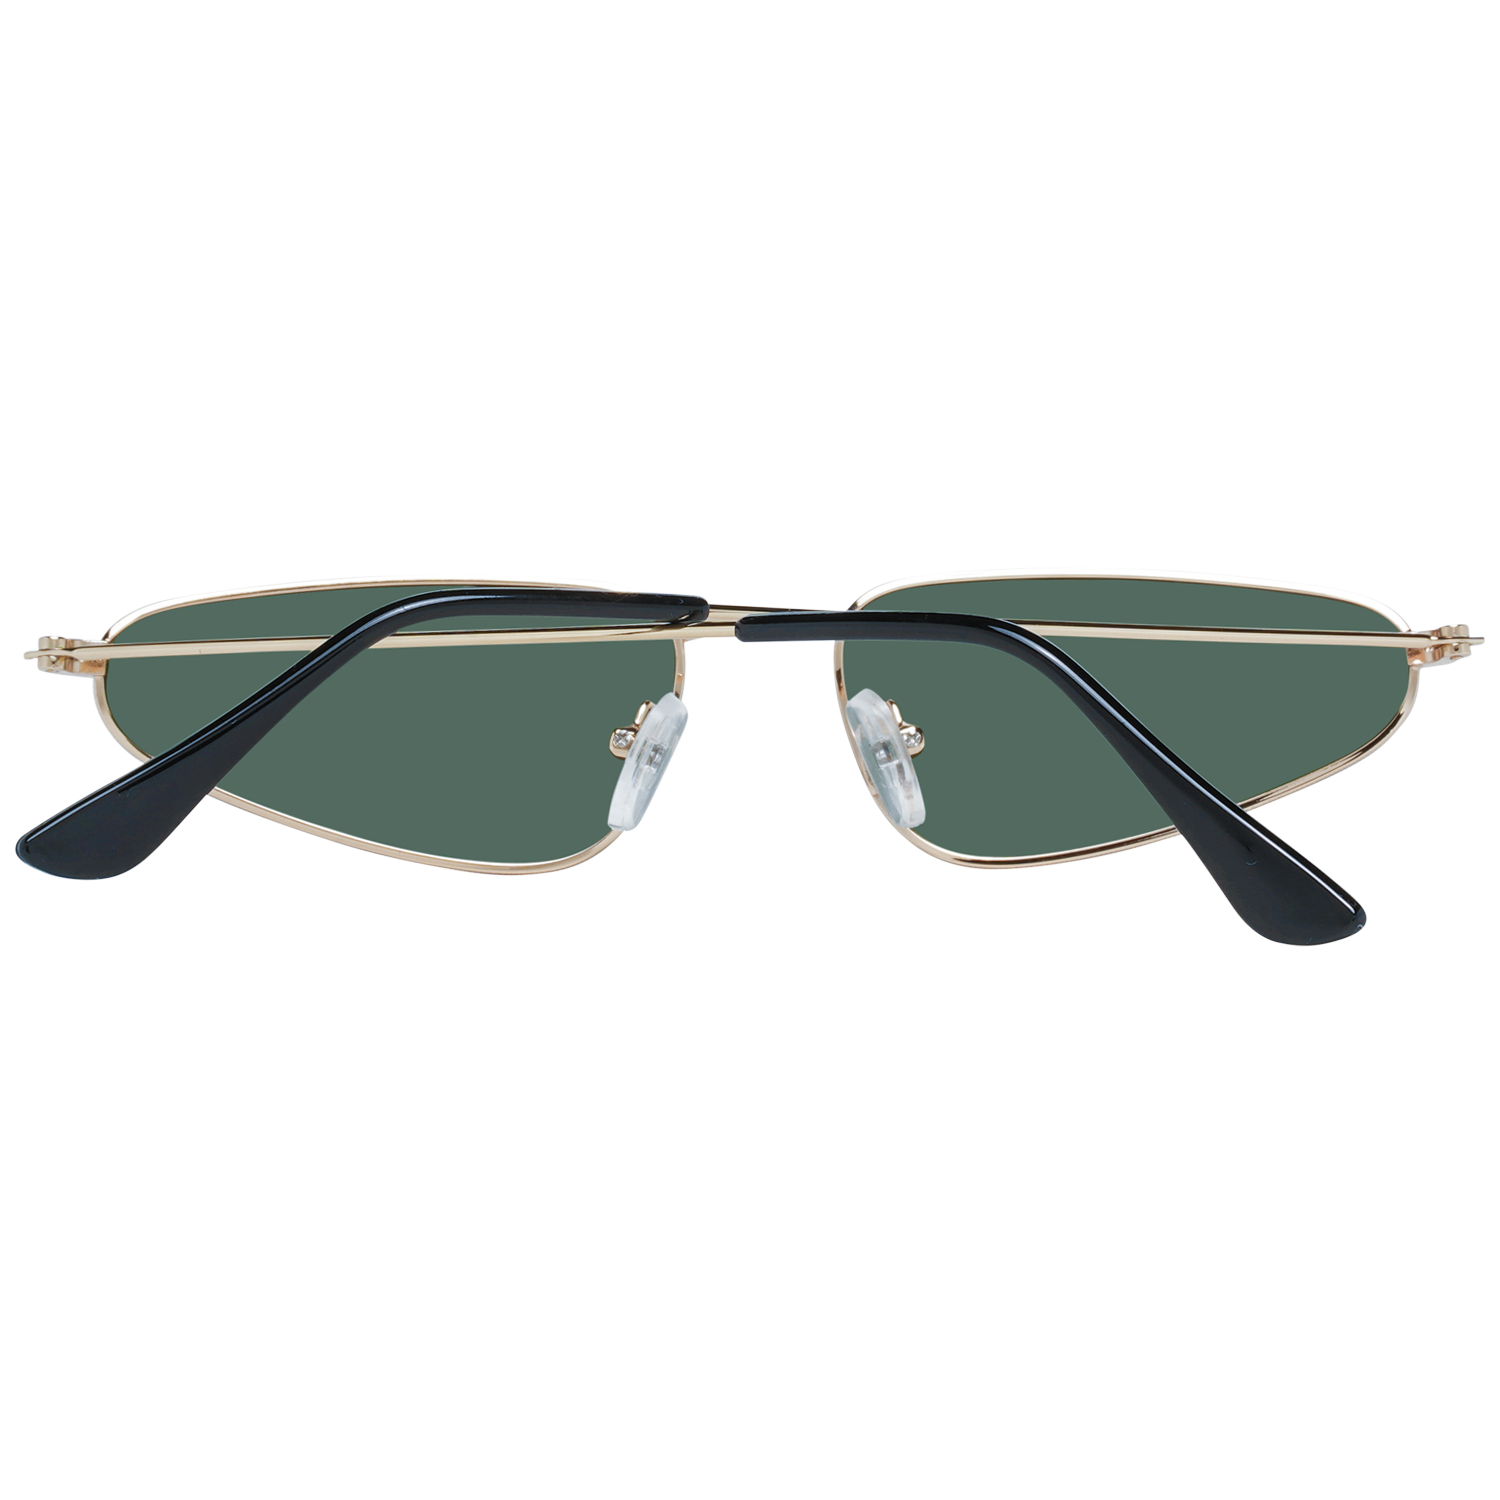 Millner Sunglasses Millner Sunglasses 0021102 Gatwick Eyeglasses Eyewear UK USA Australia 